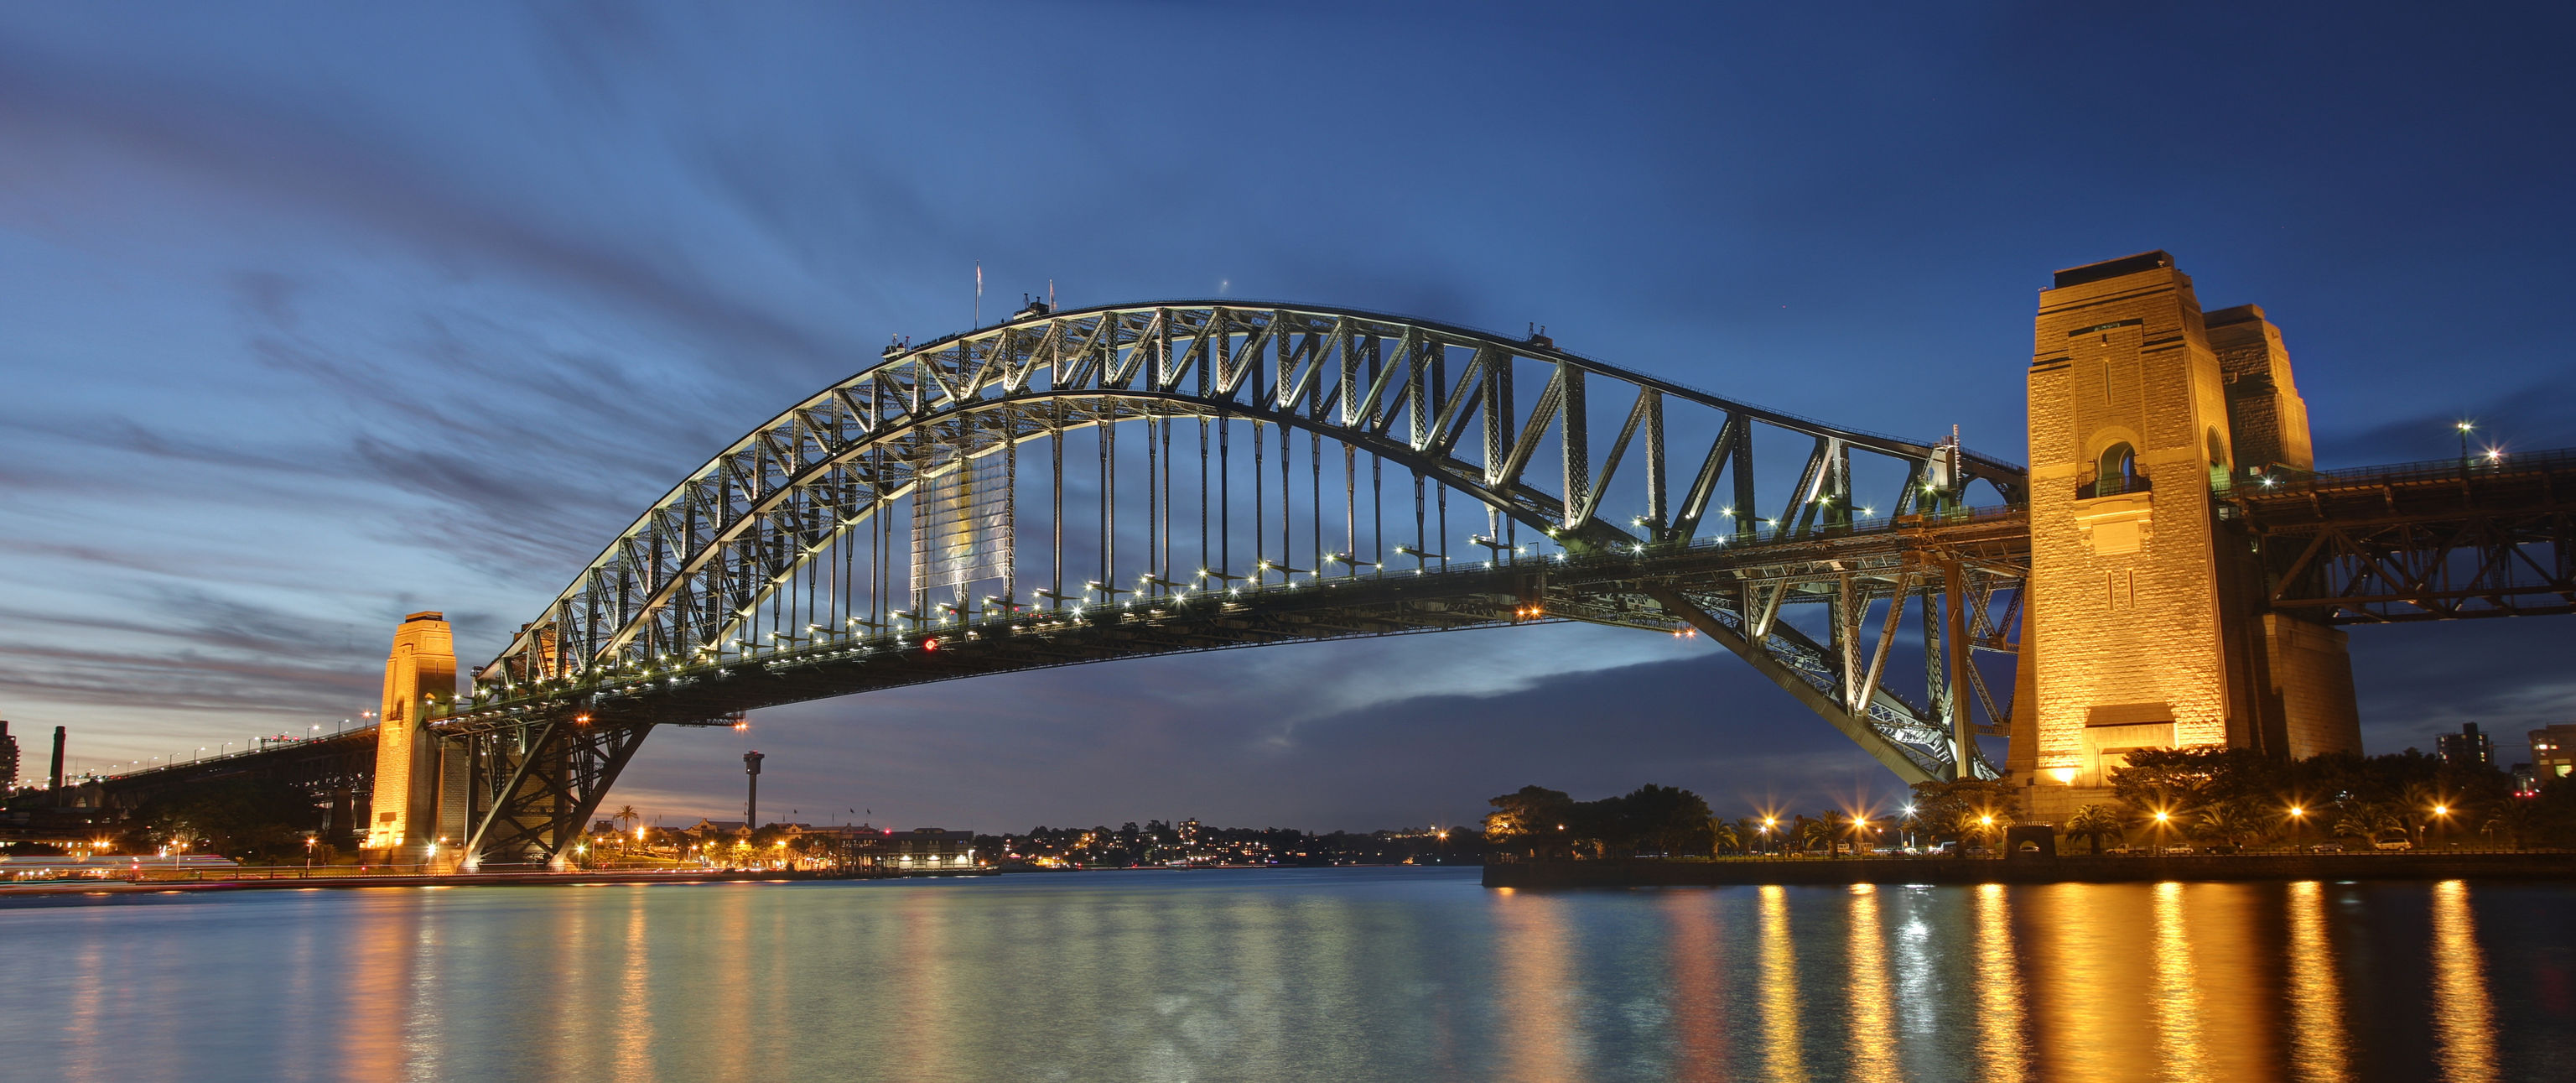 Sydney Harbour Bridge - Pylon